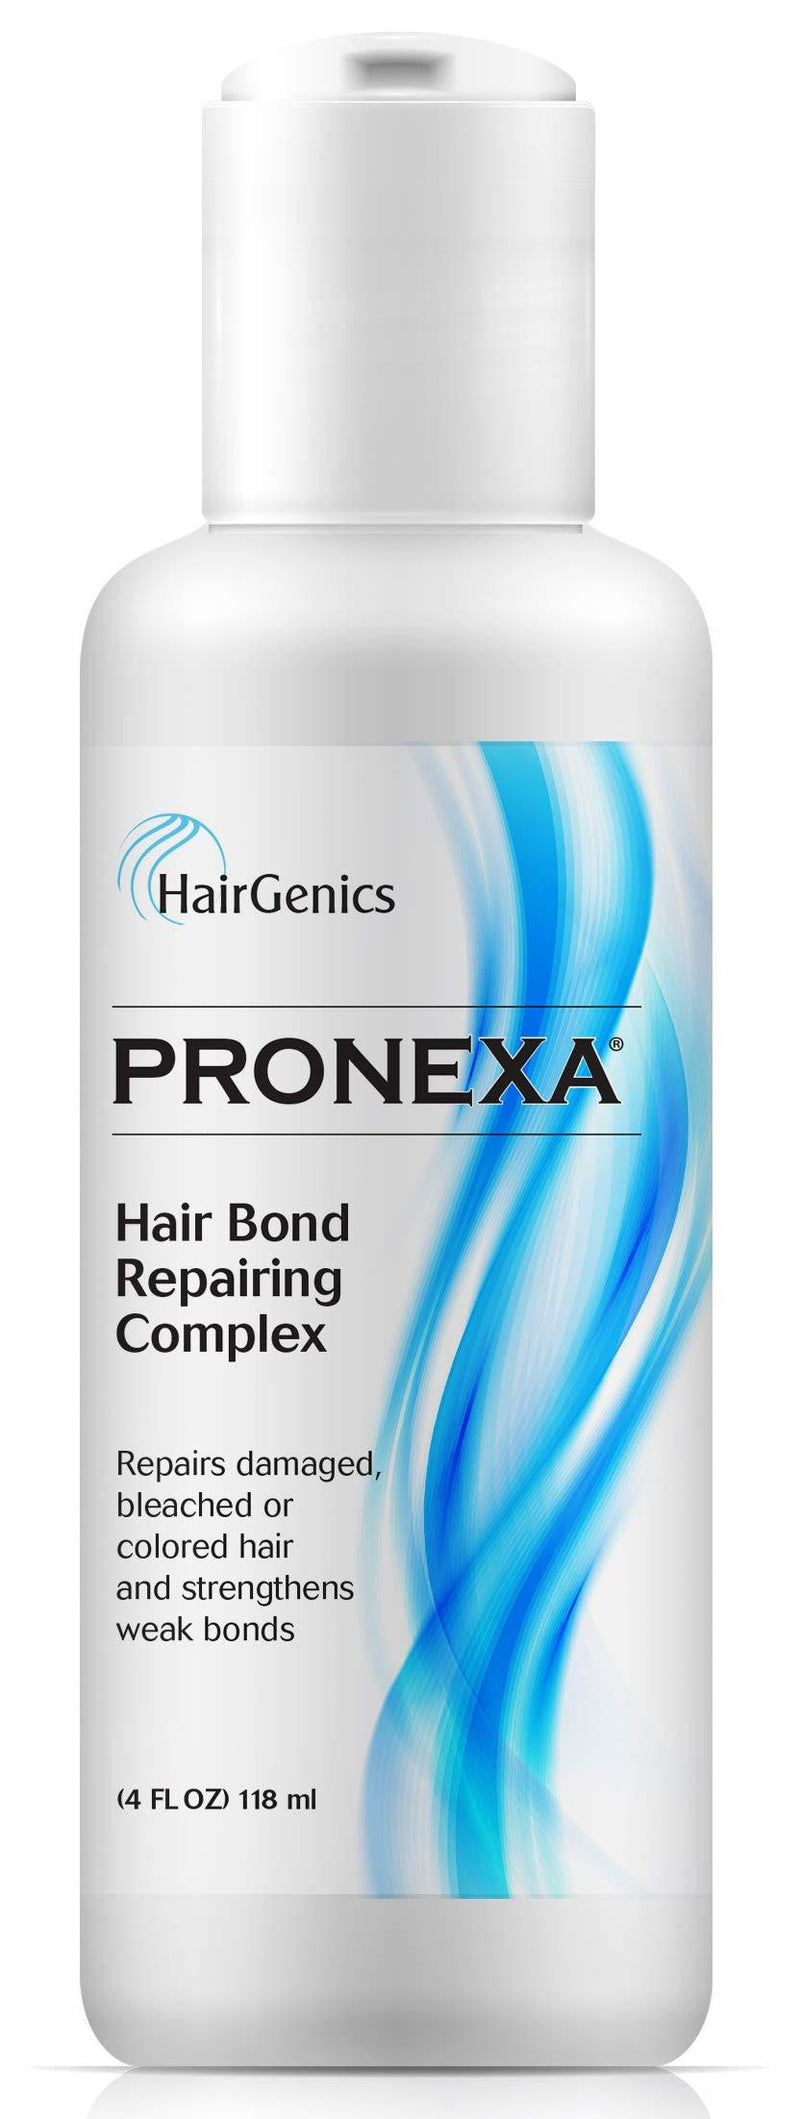 [Australia] - Hairgenics Pronexa Hair Bonder Bond Repairing Complex and Conditioner for Damaged and Treated Hair. 4 FL OZ Provides 8 full treatments 